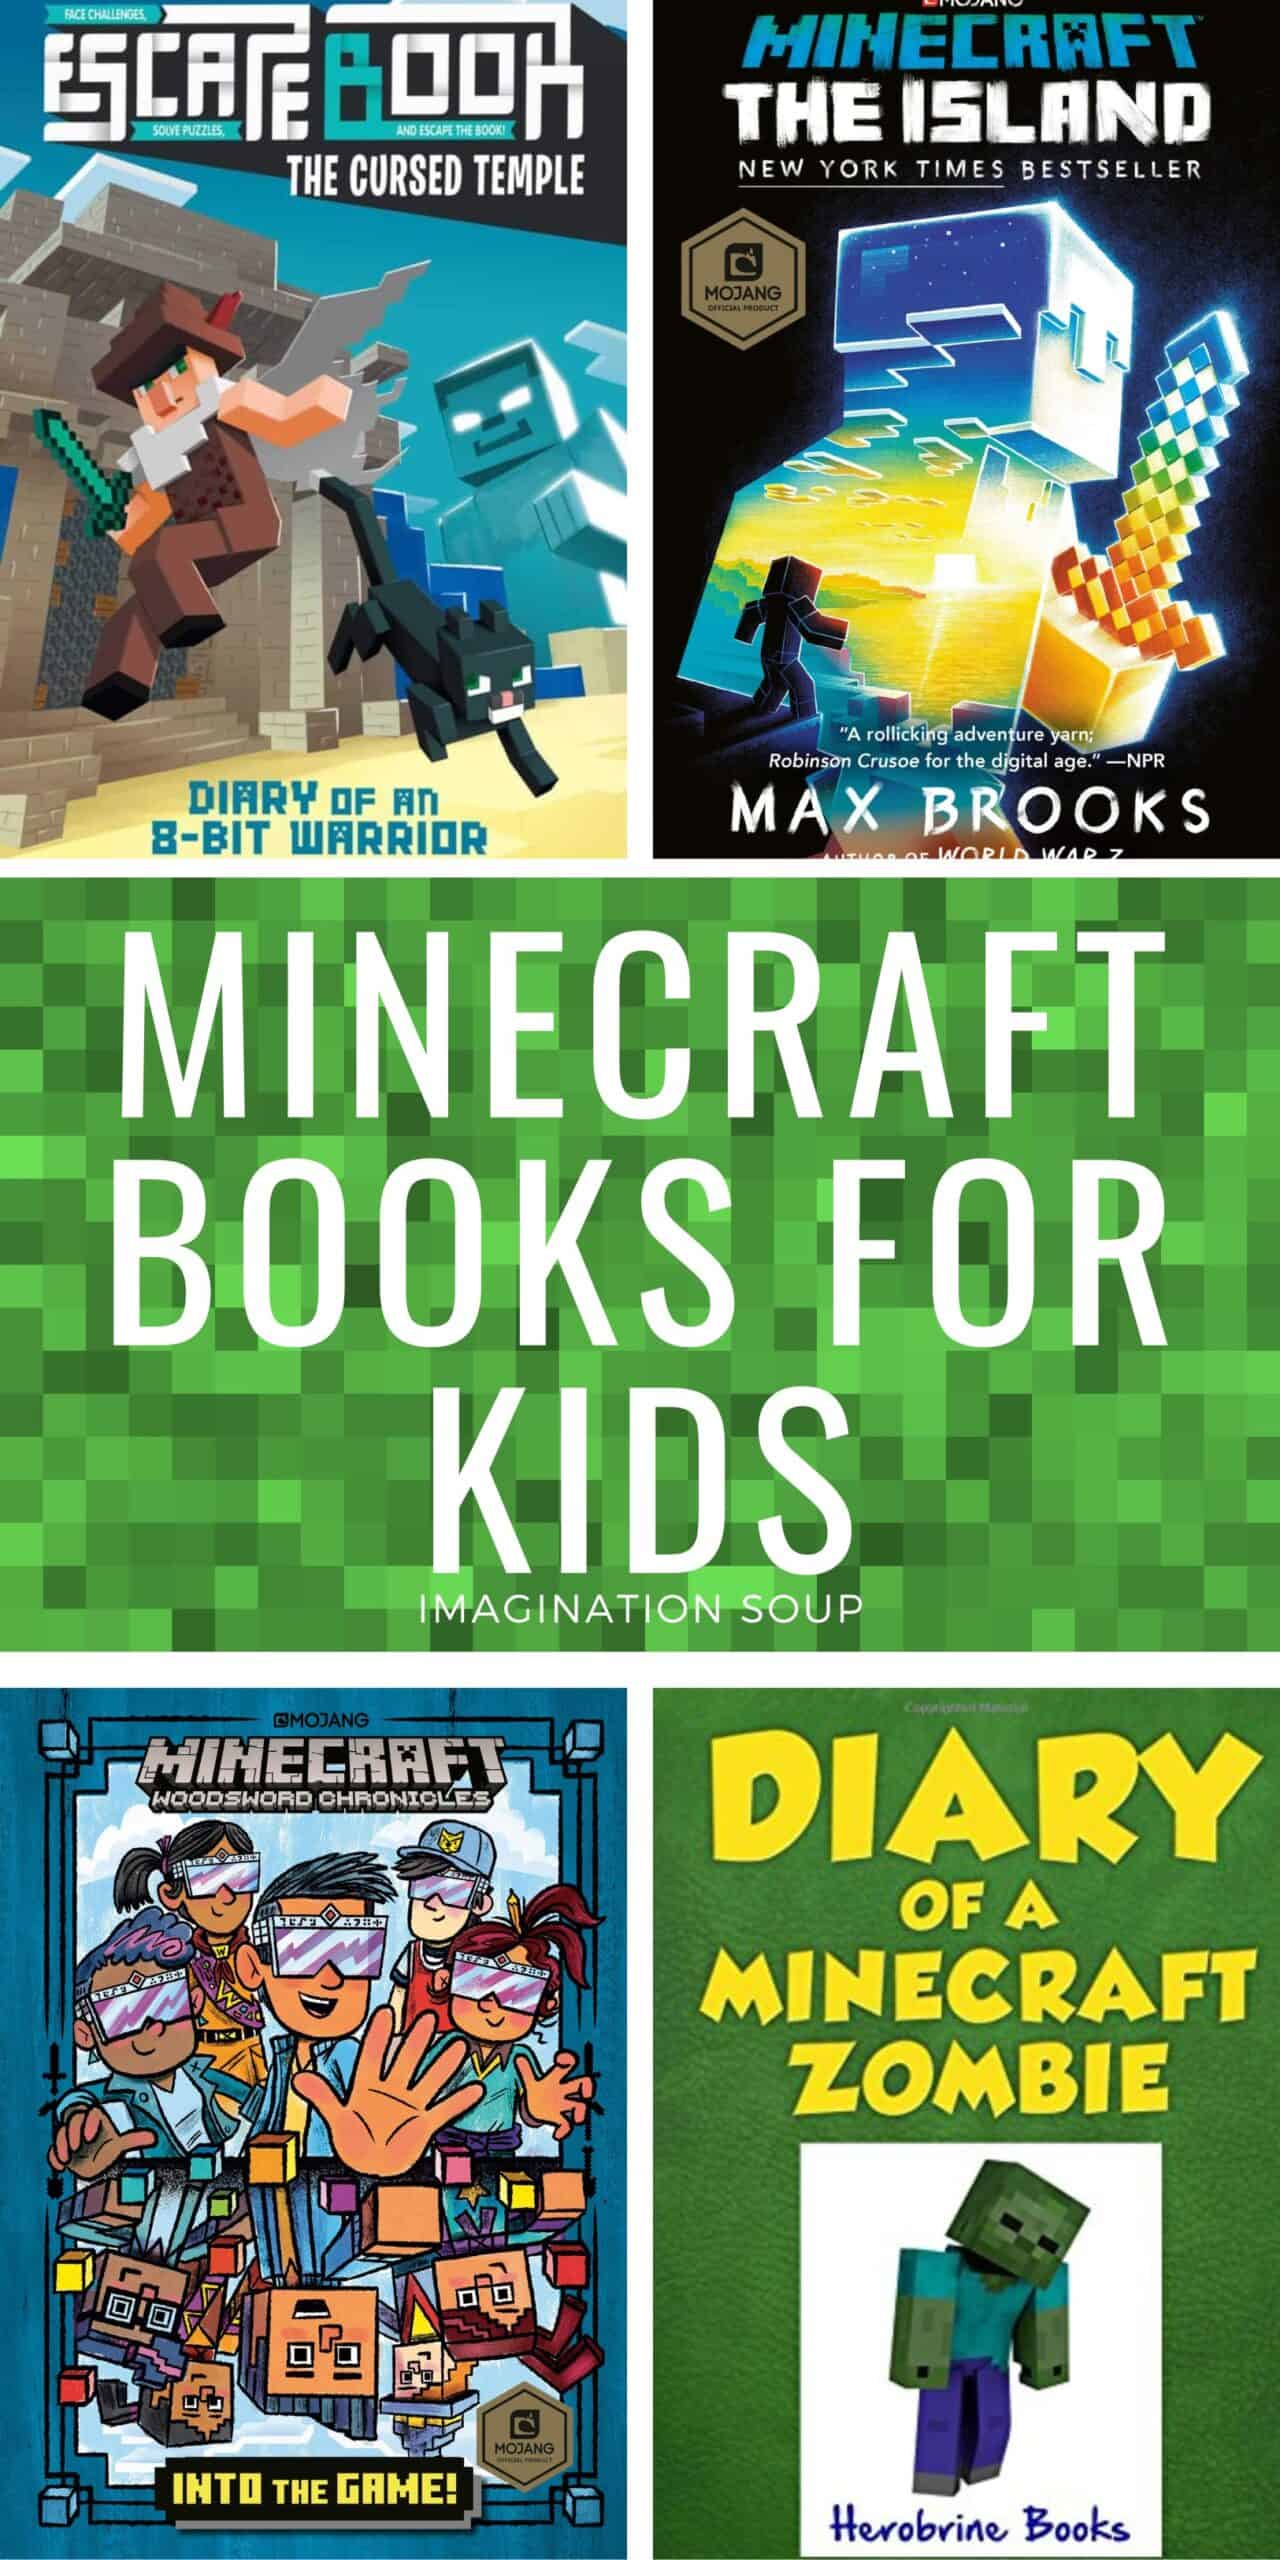 MINECRAFT BOOKS FOR KIDS